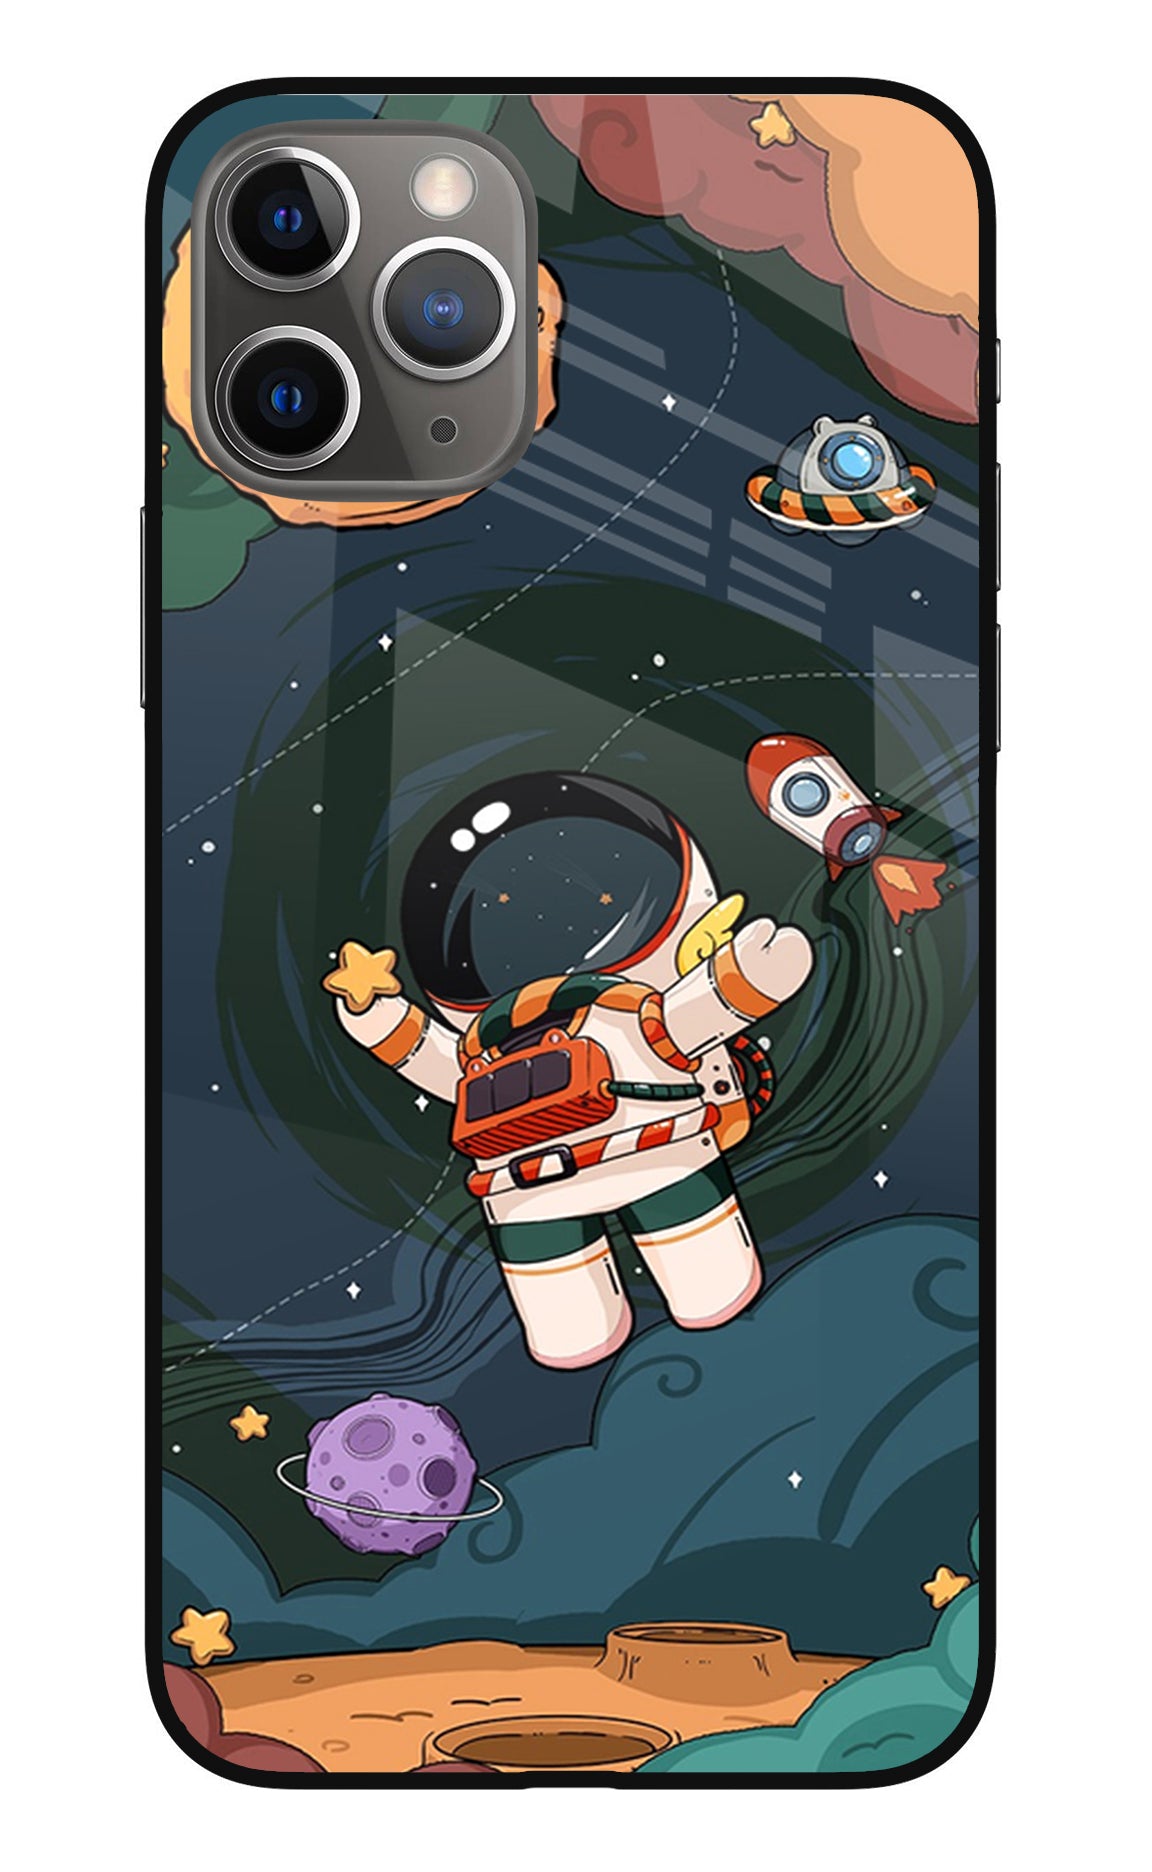 Cartoon Astronaut iPhone 11 Pro Back Cover